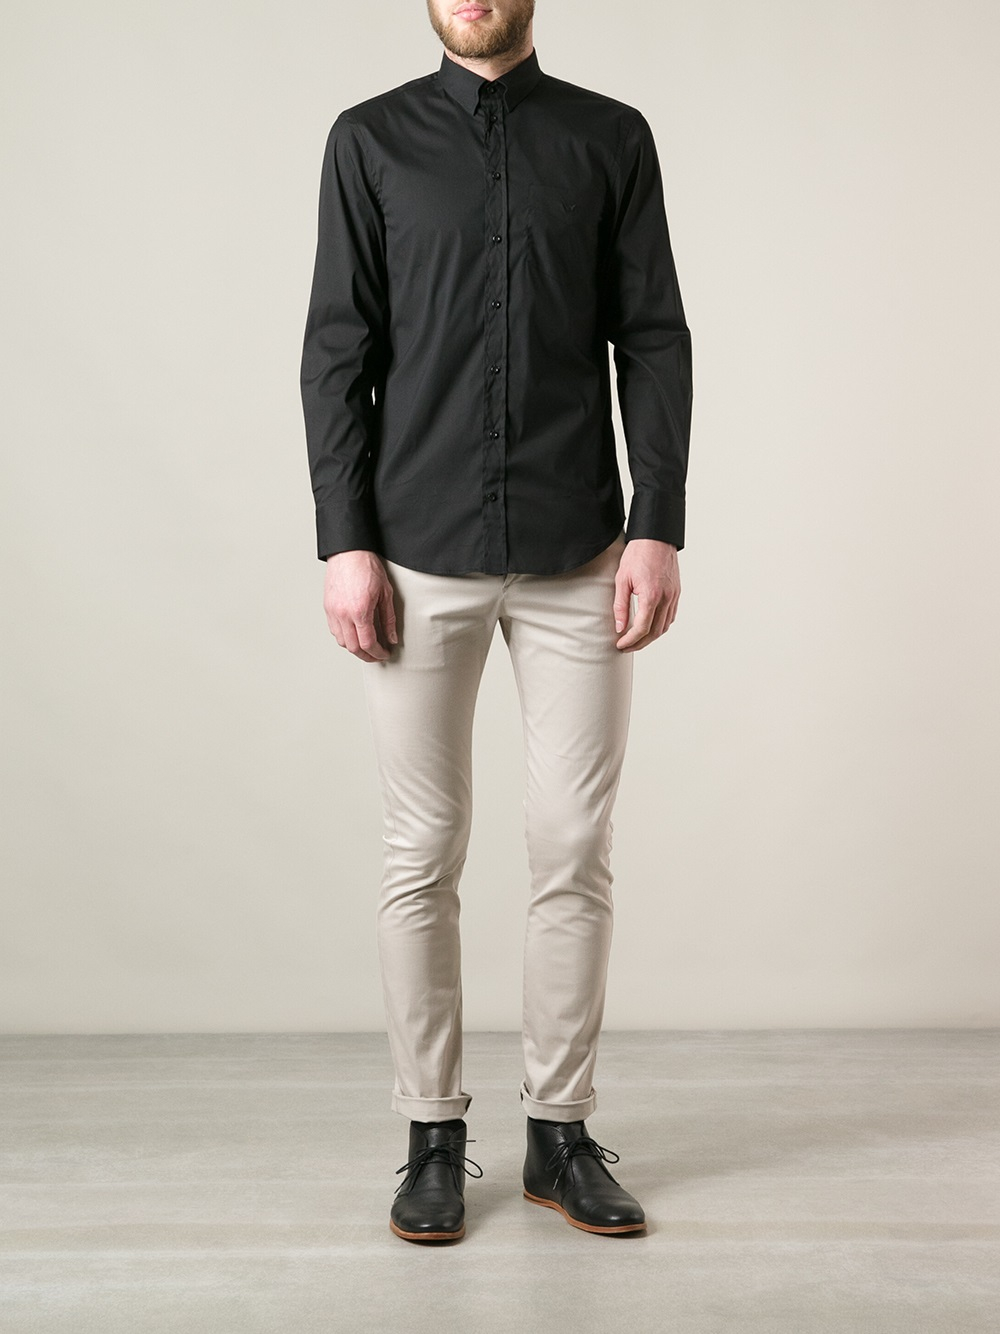 Lyst - Emporio Armani Classic Formal Shirt in Black for Men